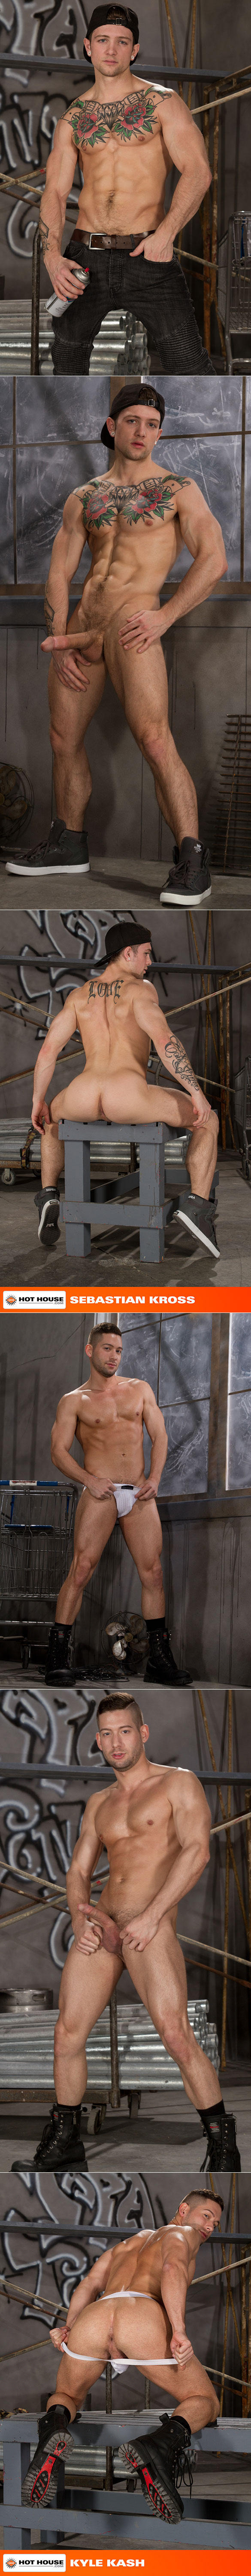 HotHouse: Sebastian Kross fucks Kyle Kash in "Cruising Grounds"